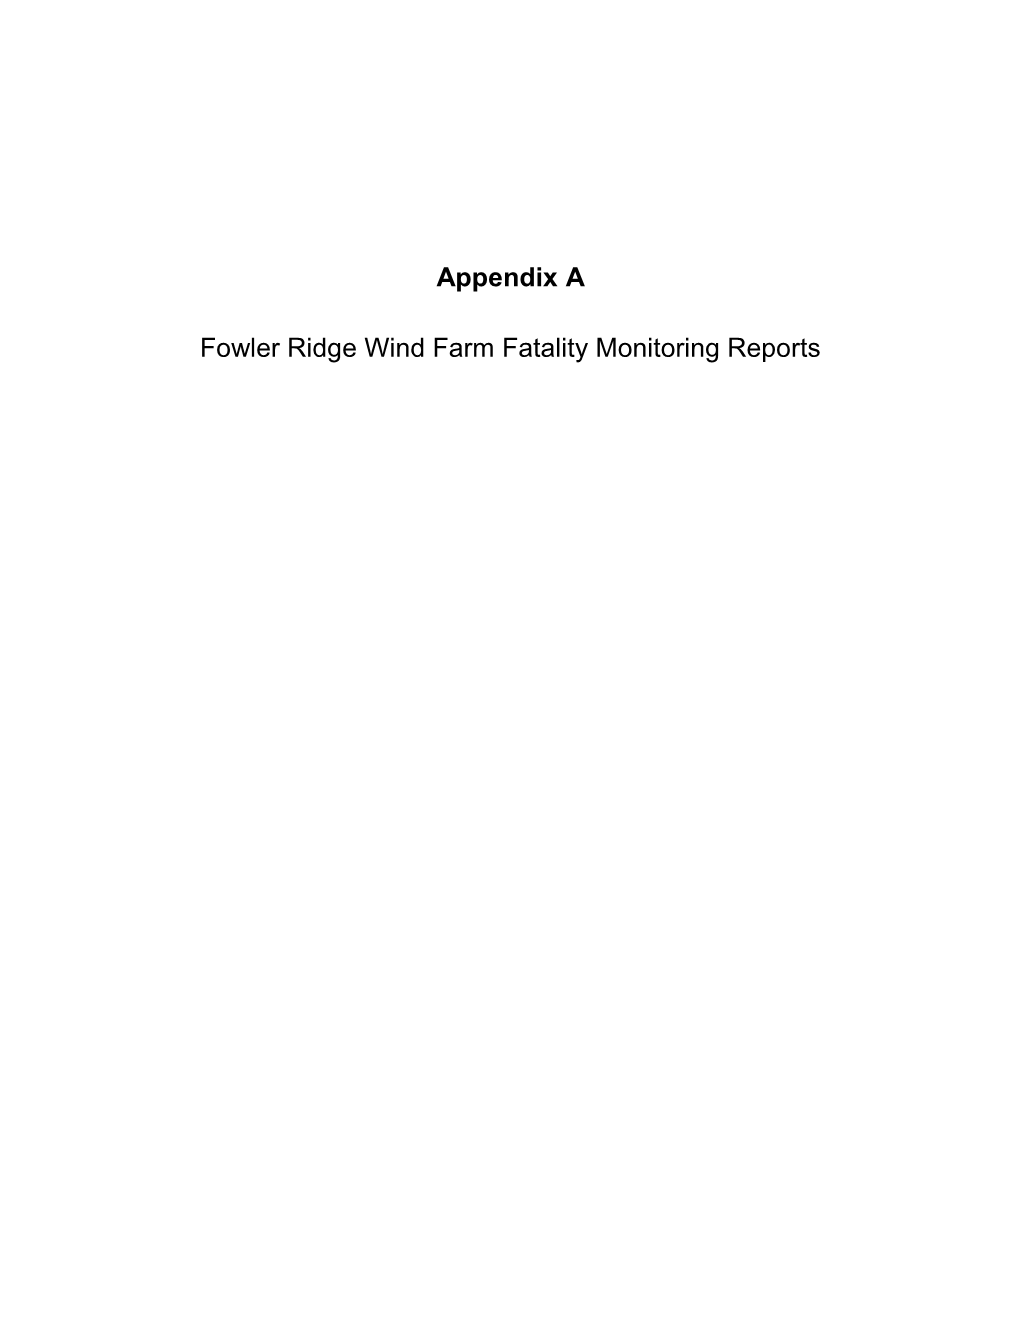 Fowler Ridge Wind Farm Fatality Monitoring Reports